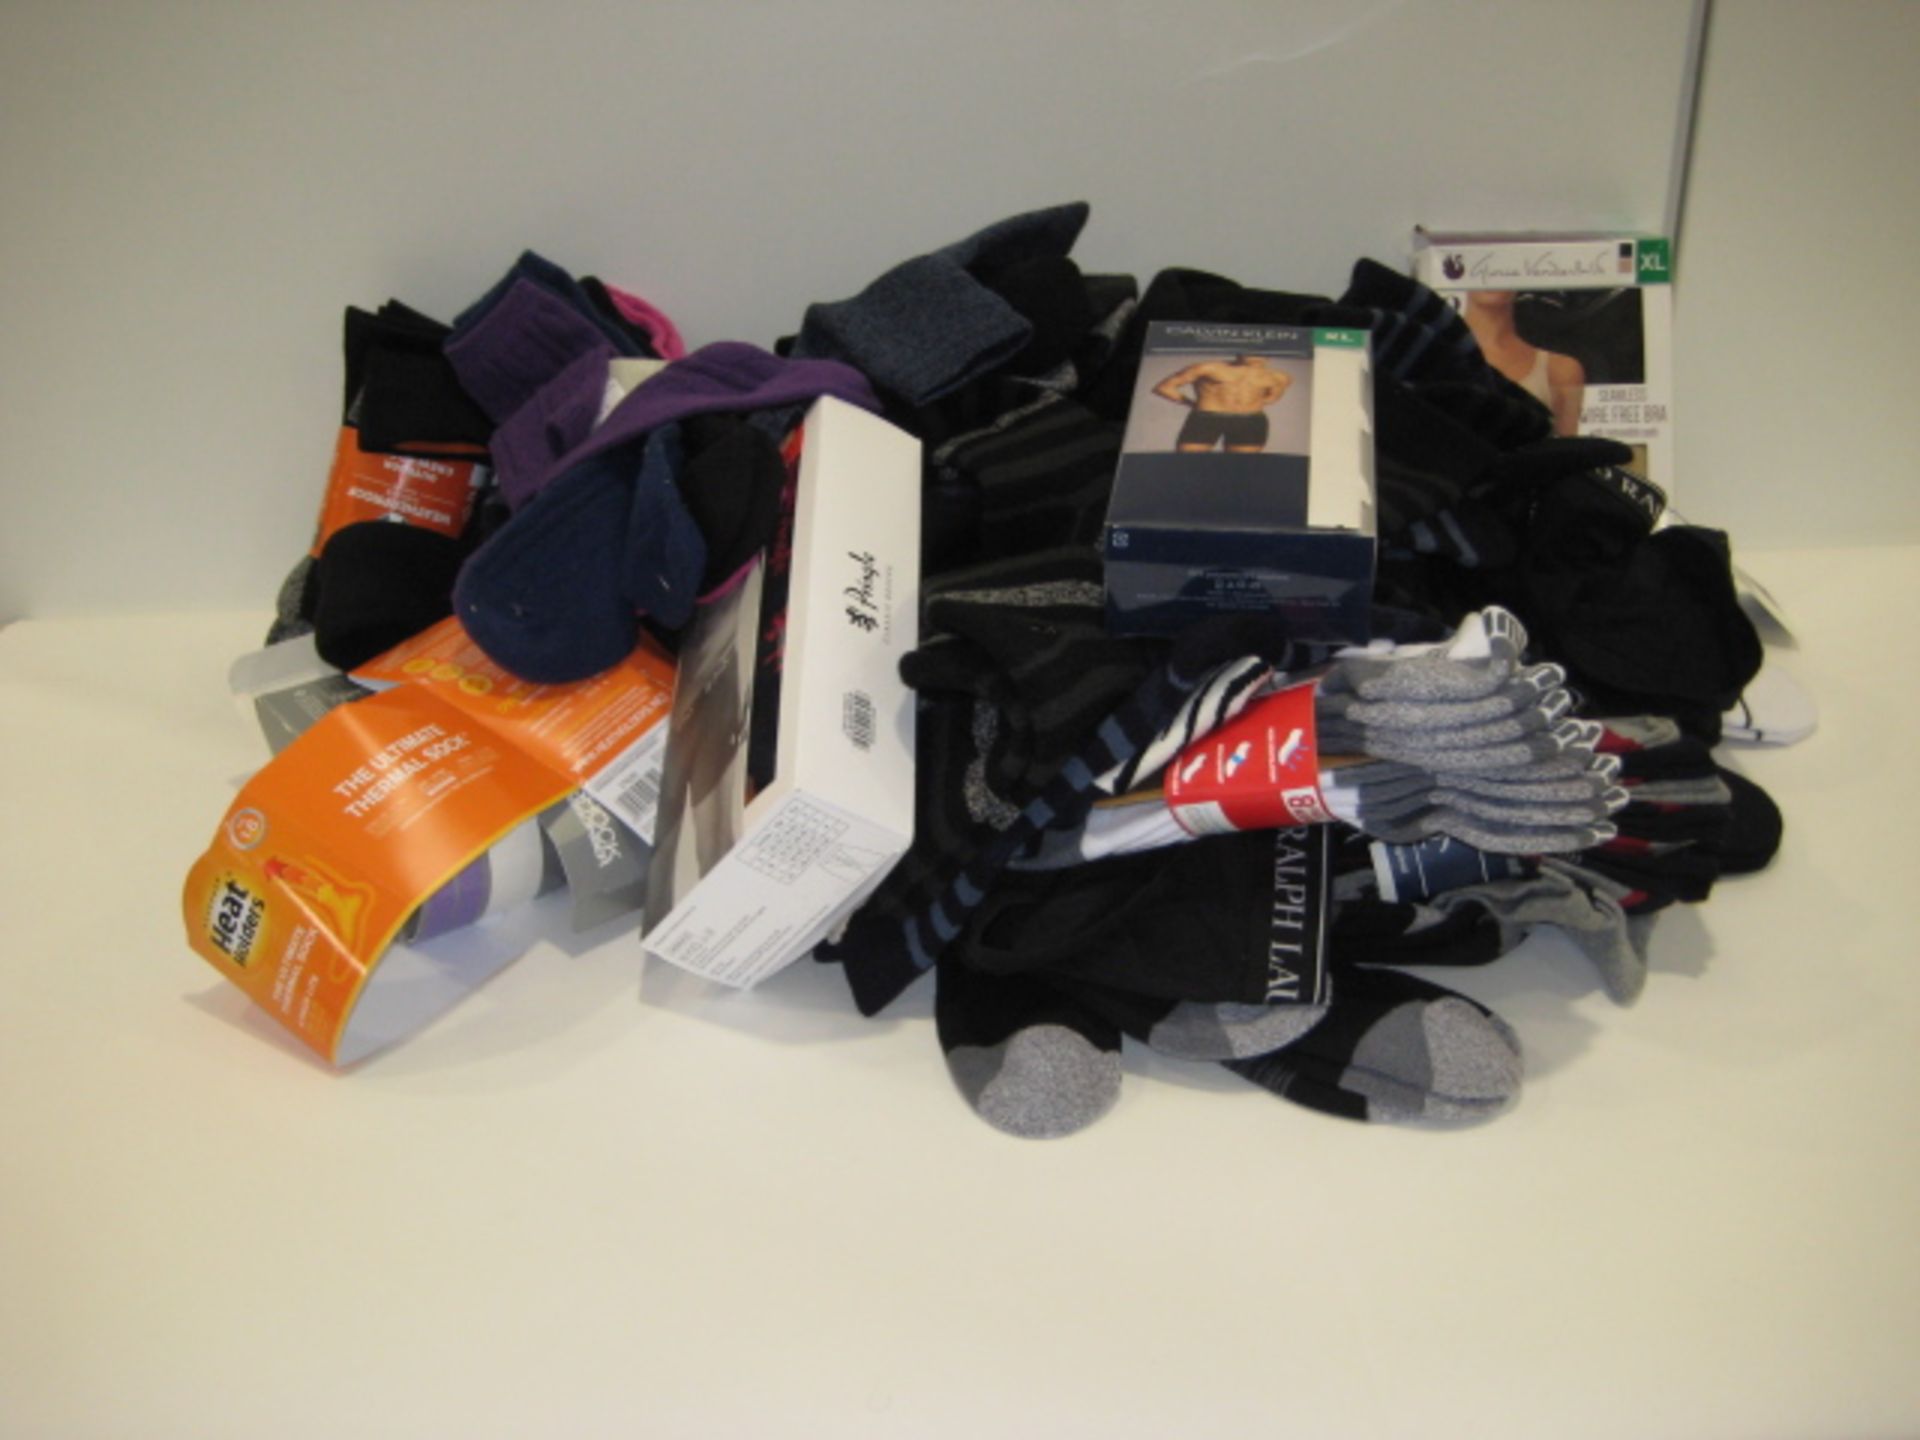 Bag containing socks, gents underwear, ladies bra, etc by various brands including Ralph Lauren,